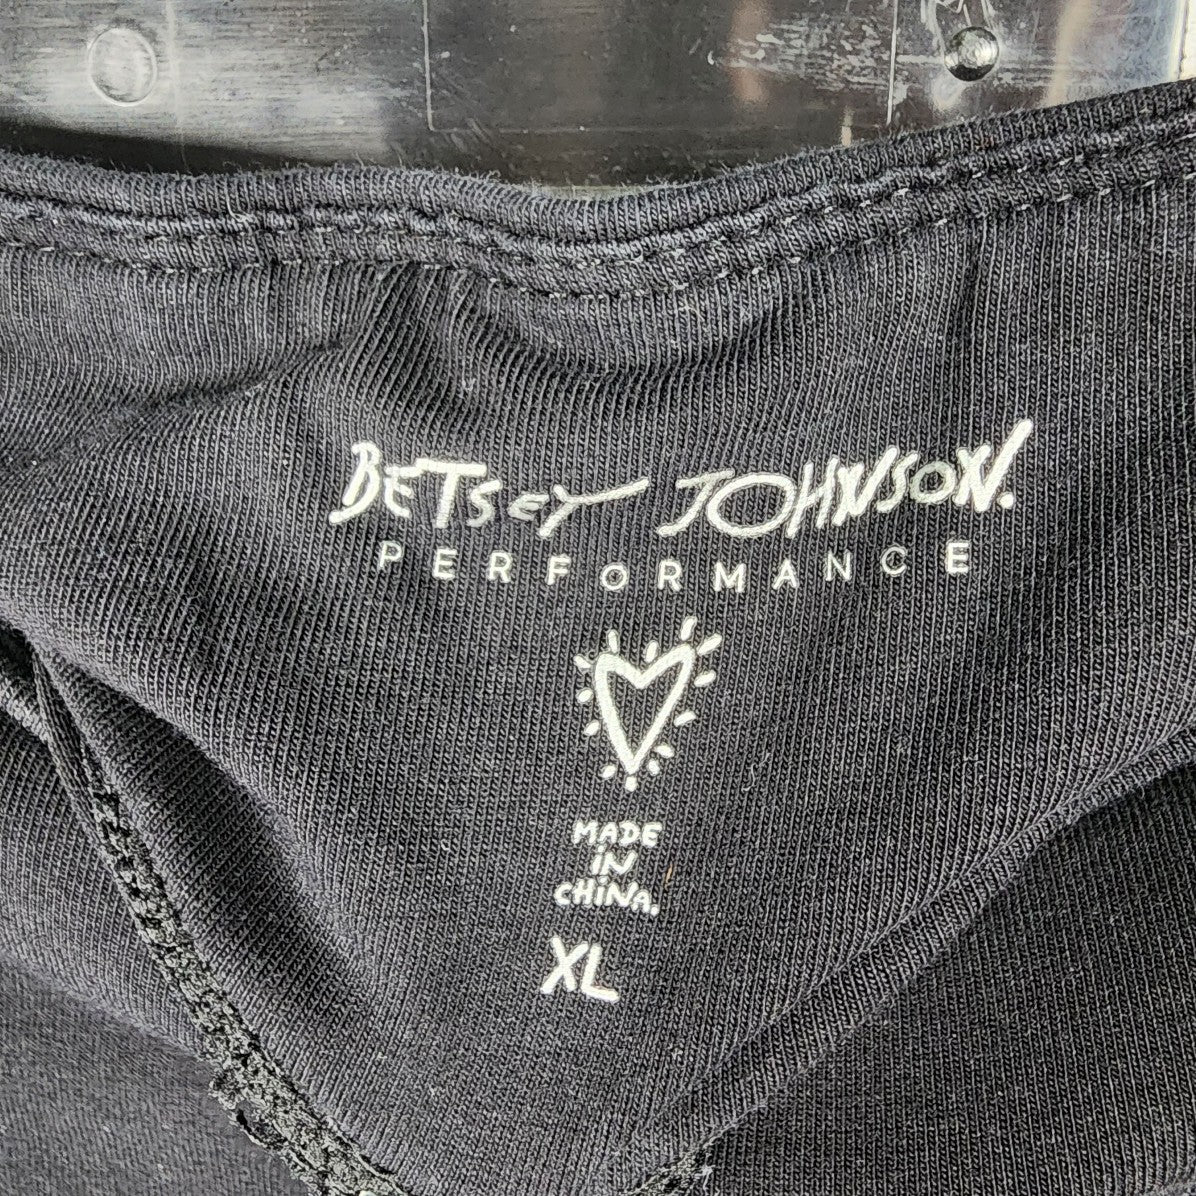 Betsey Johnson Performance Black Netted Detail Capri Active Pants Size XL